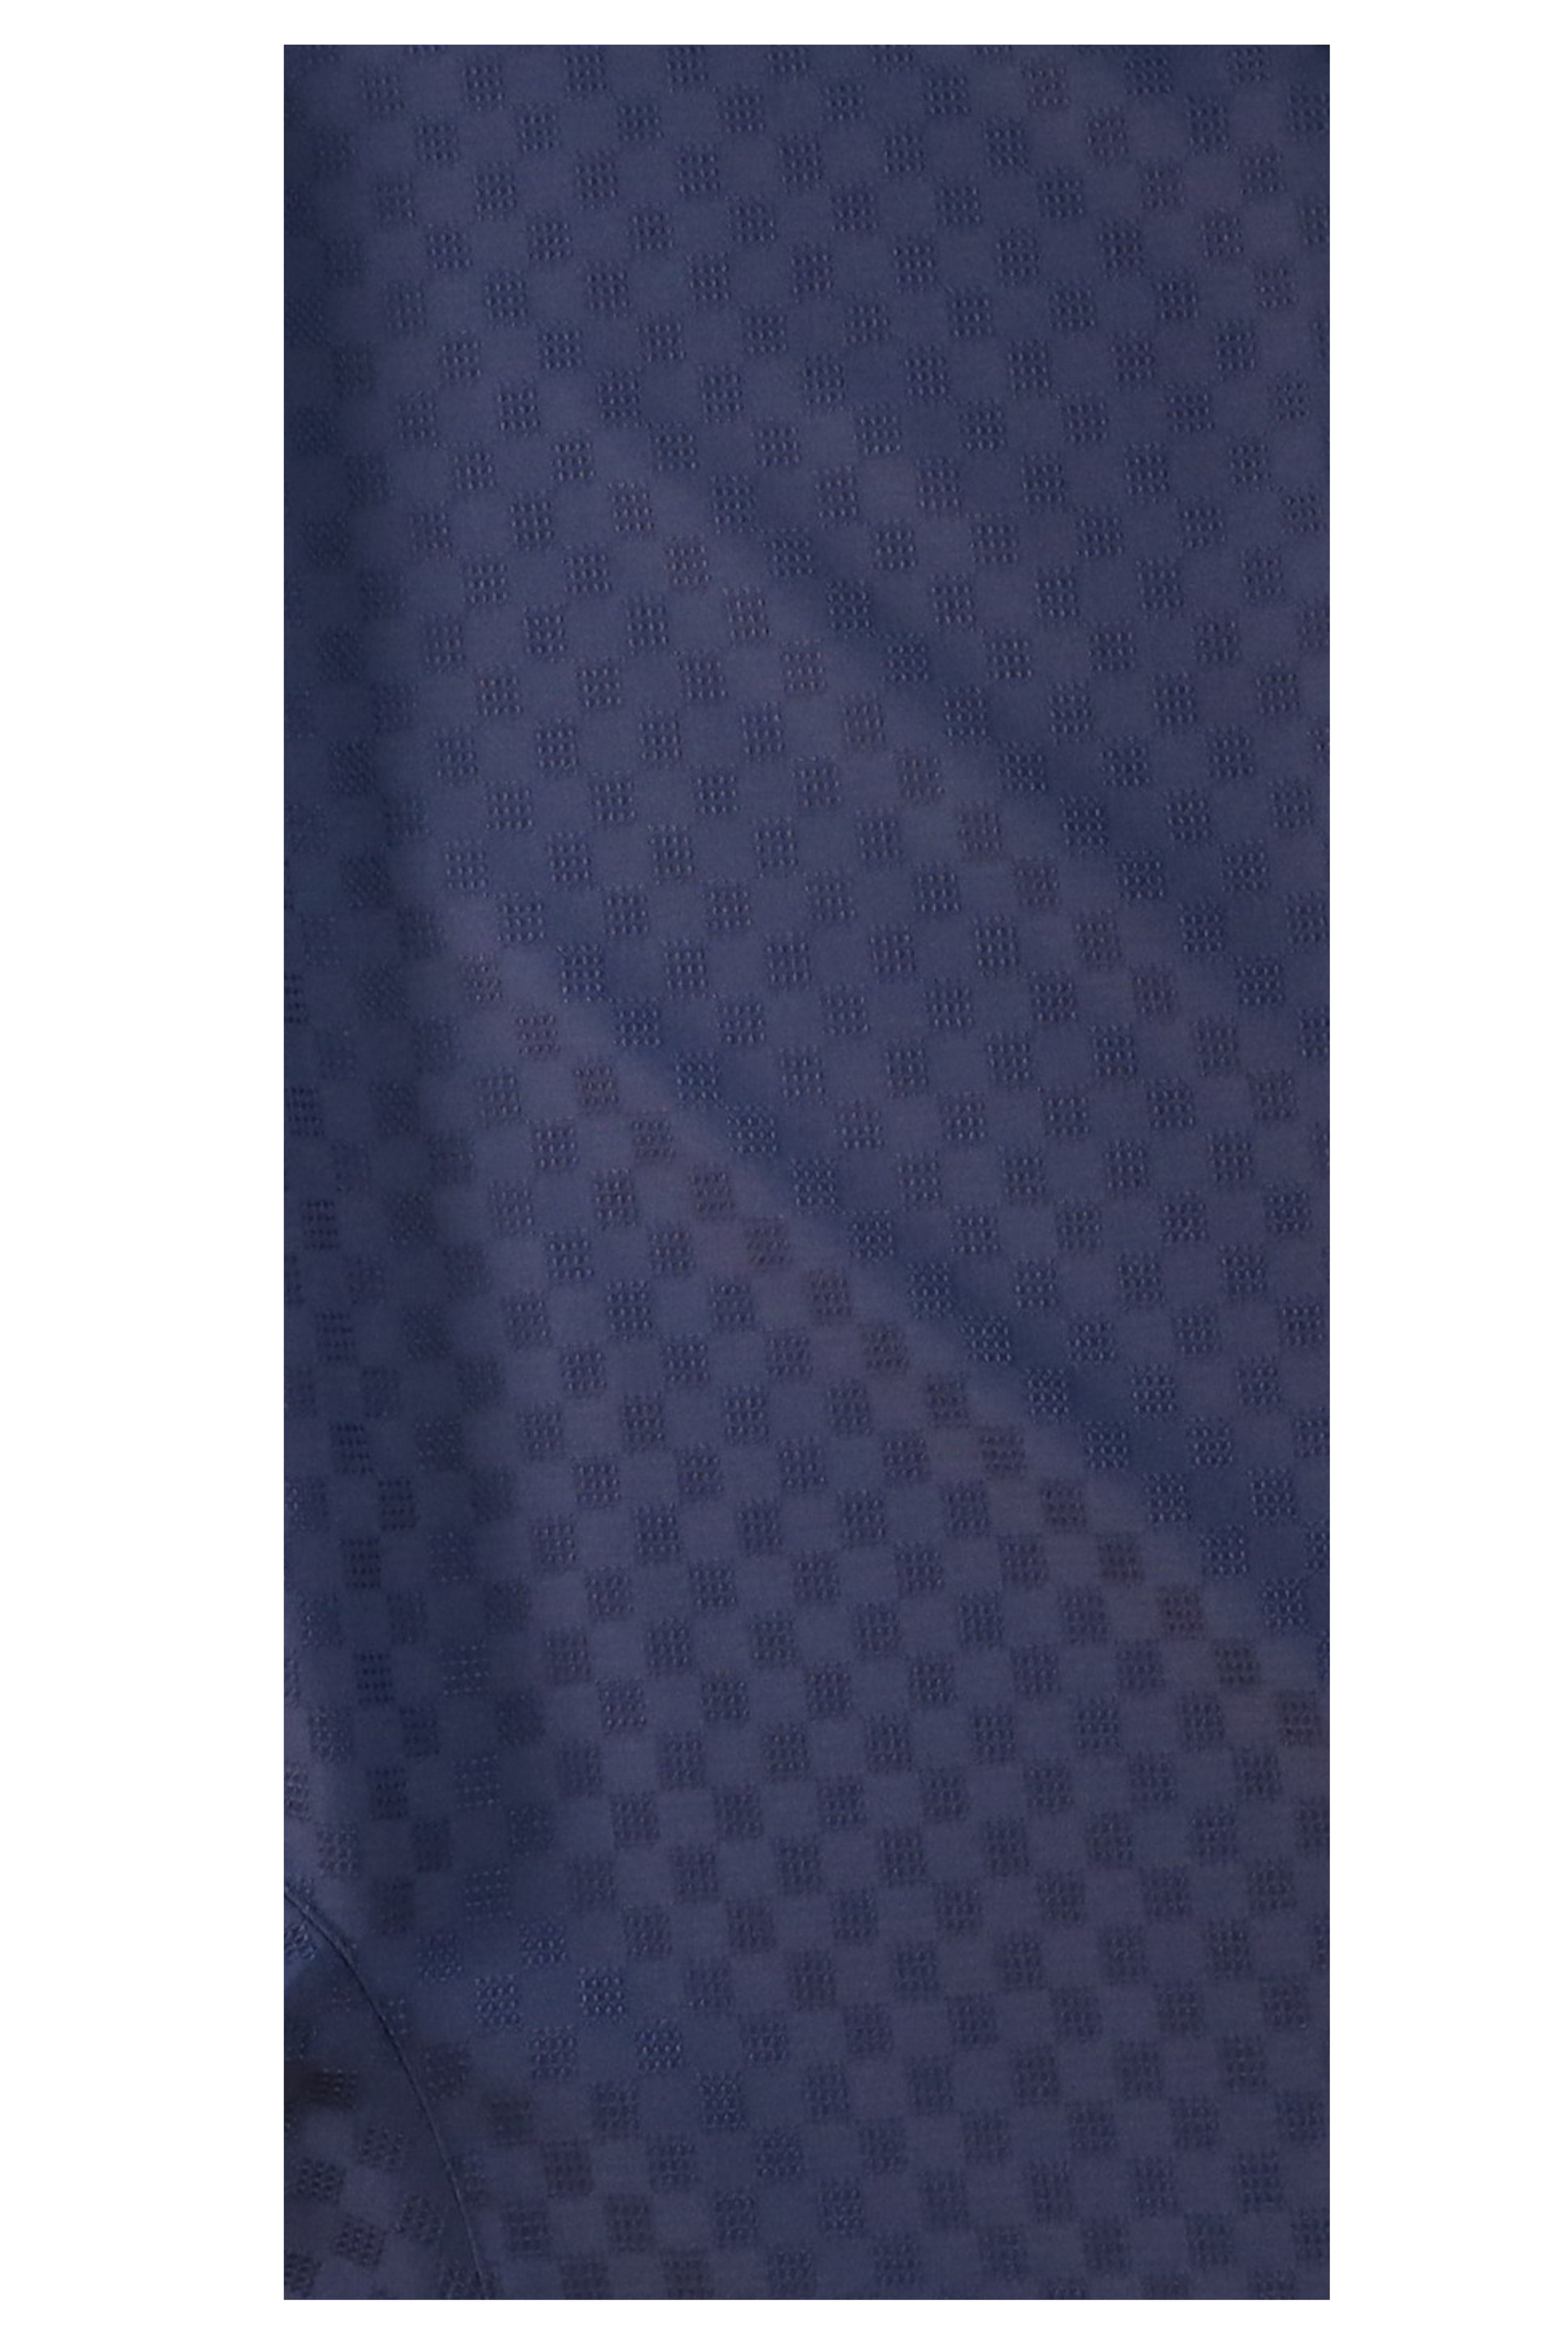 Bassiri Short Sleeve Shirt Black 62031 - Mastroianni Fashions